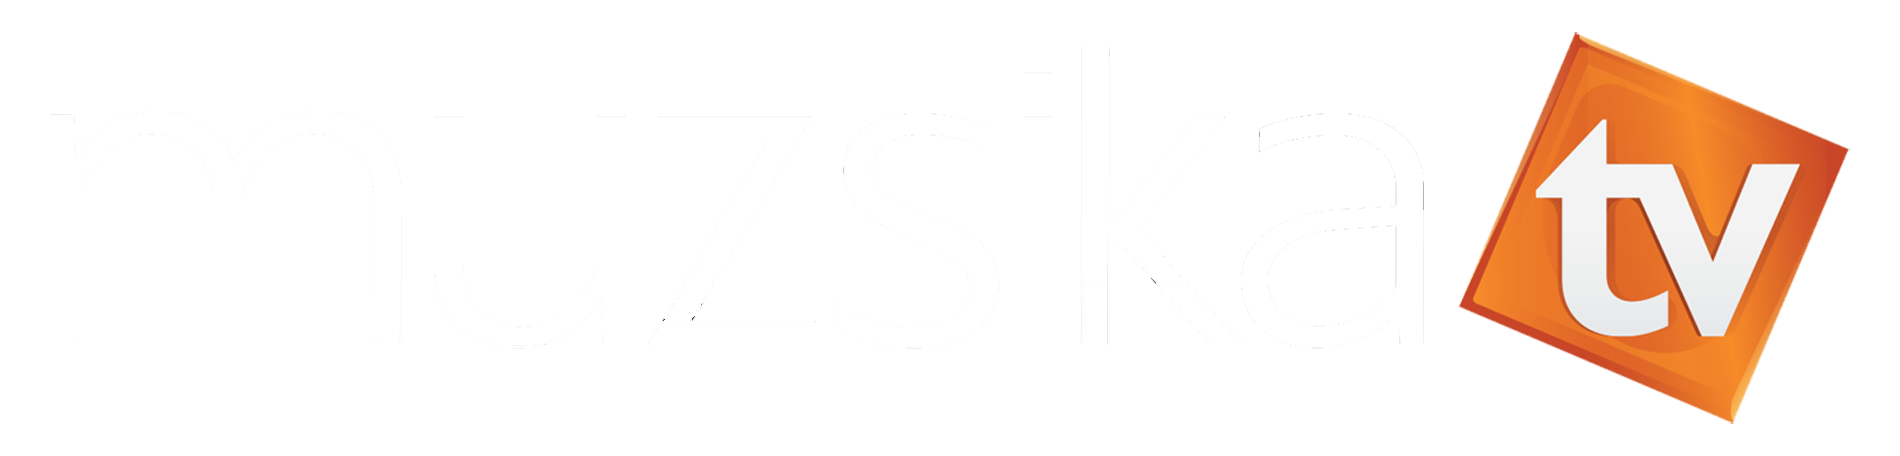 https://rtl.hu/images/muzsika-tv-logo.png